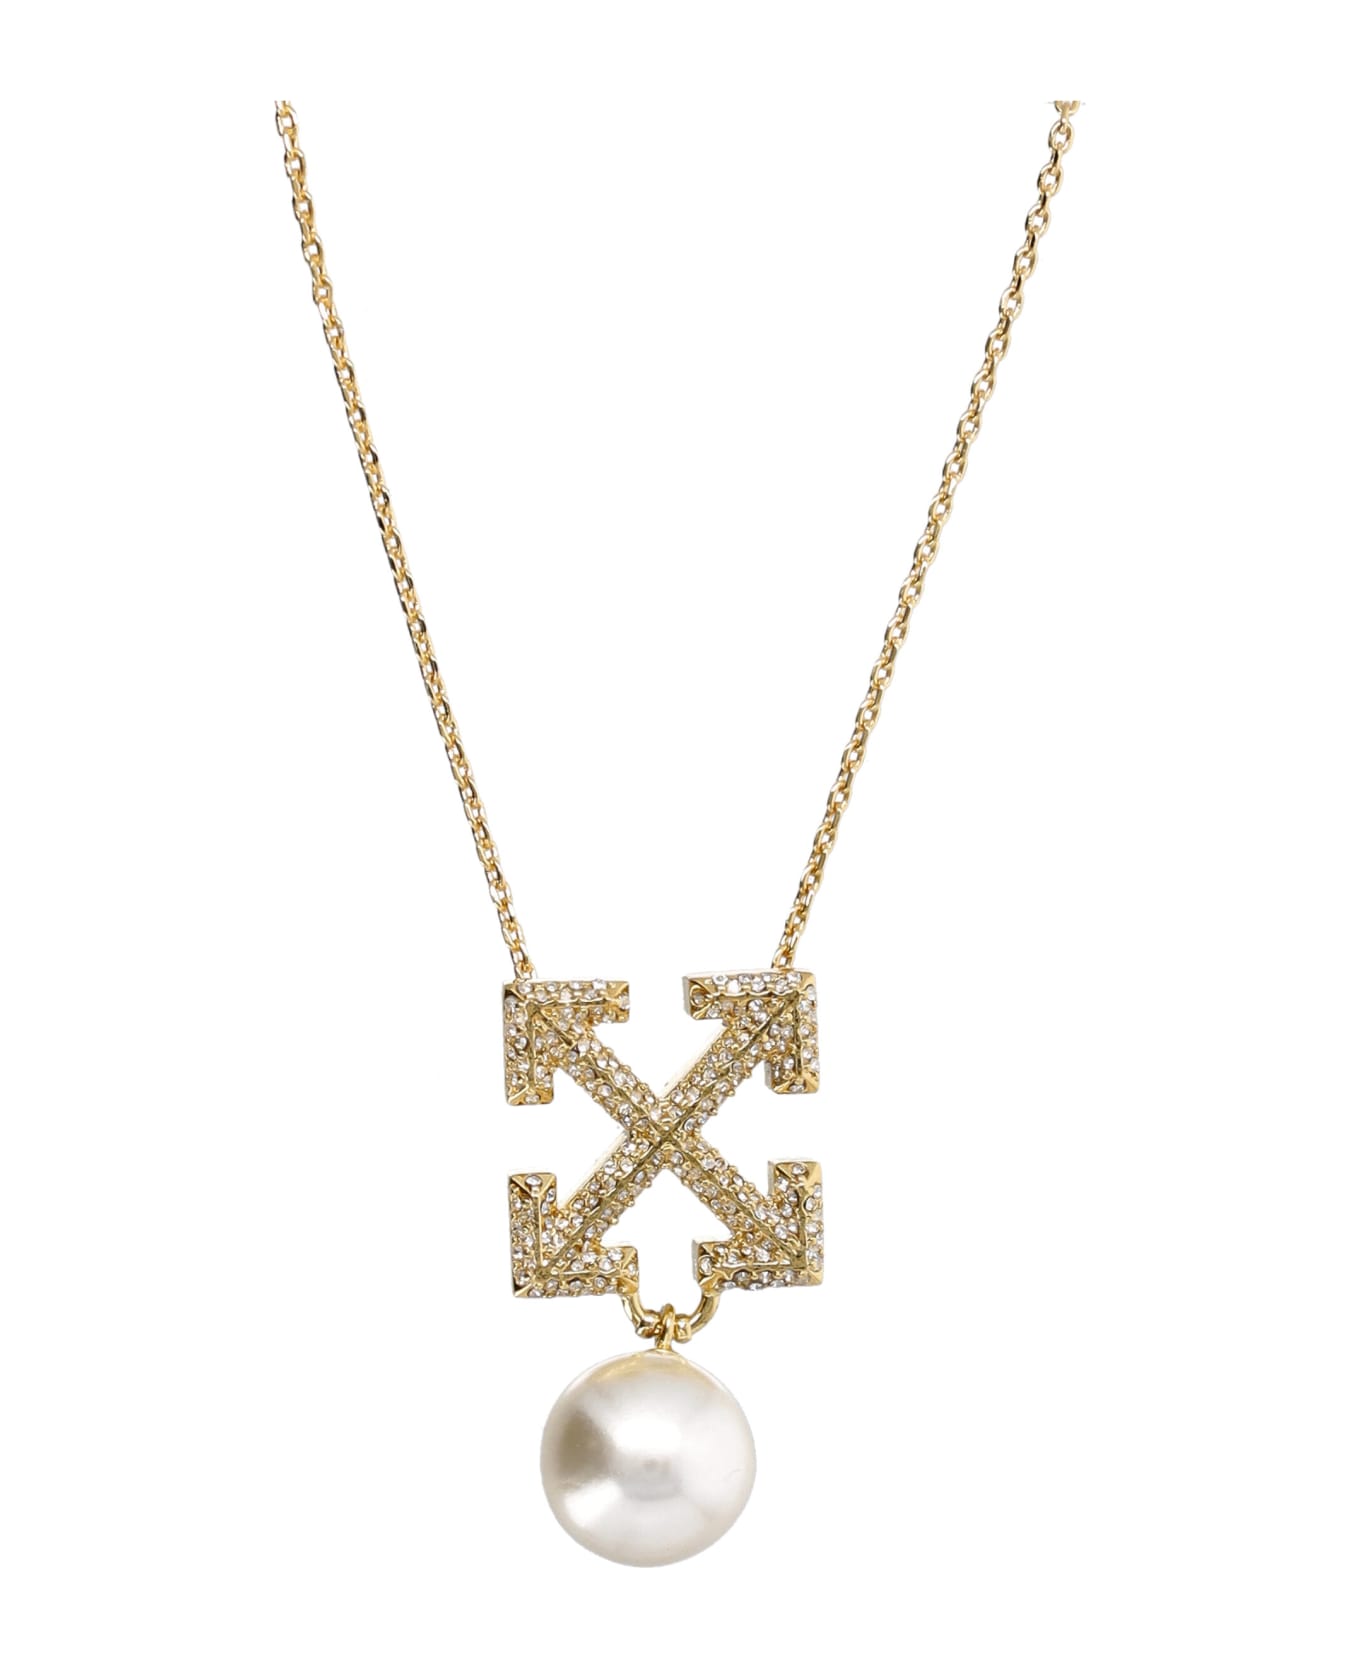 Off-White Pavé Pearl Pendant Necklace - GOLD